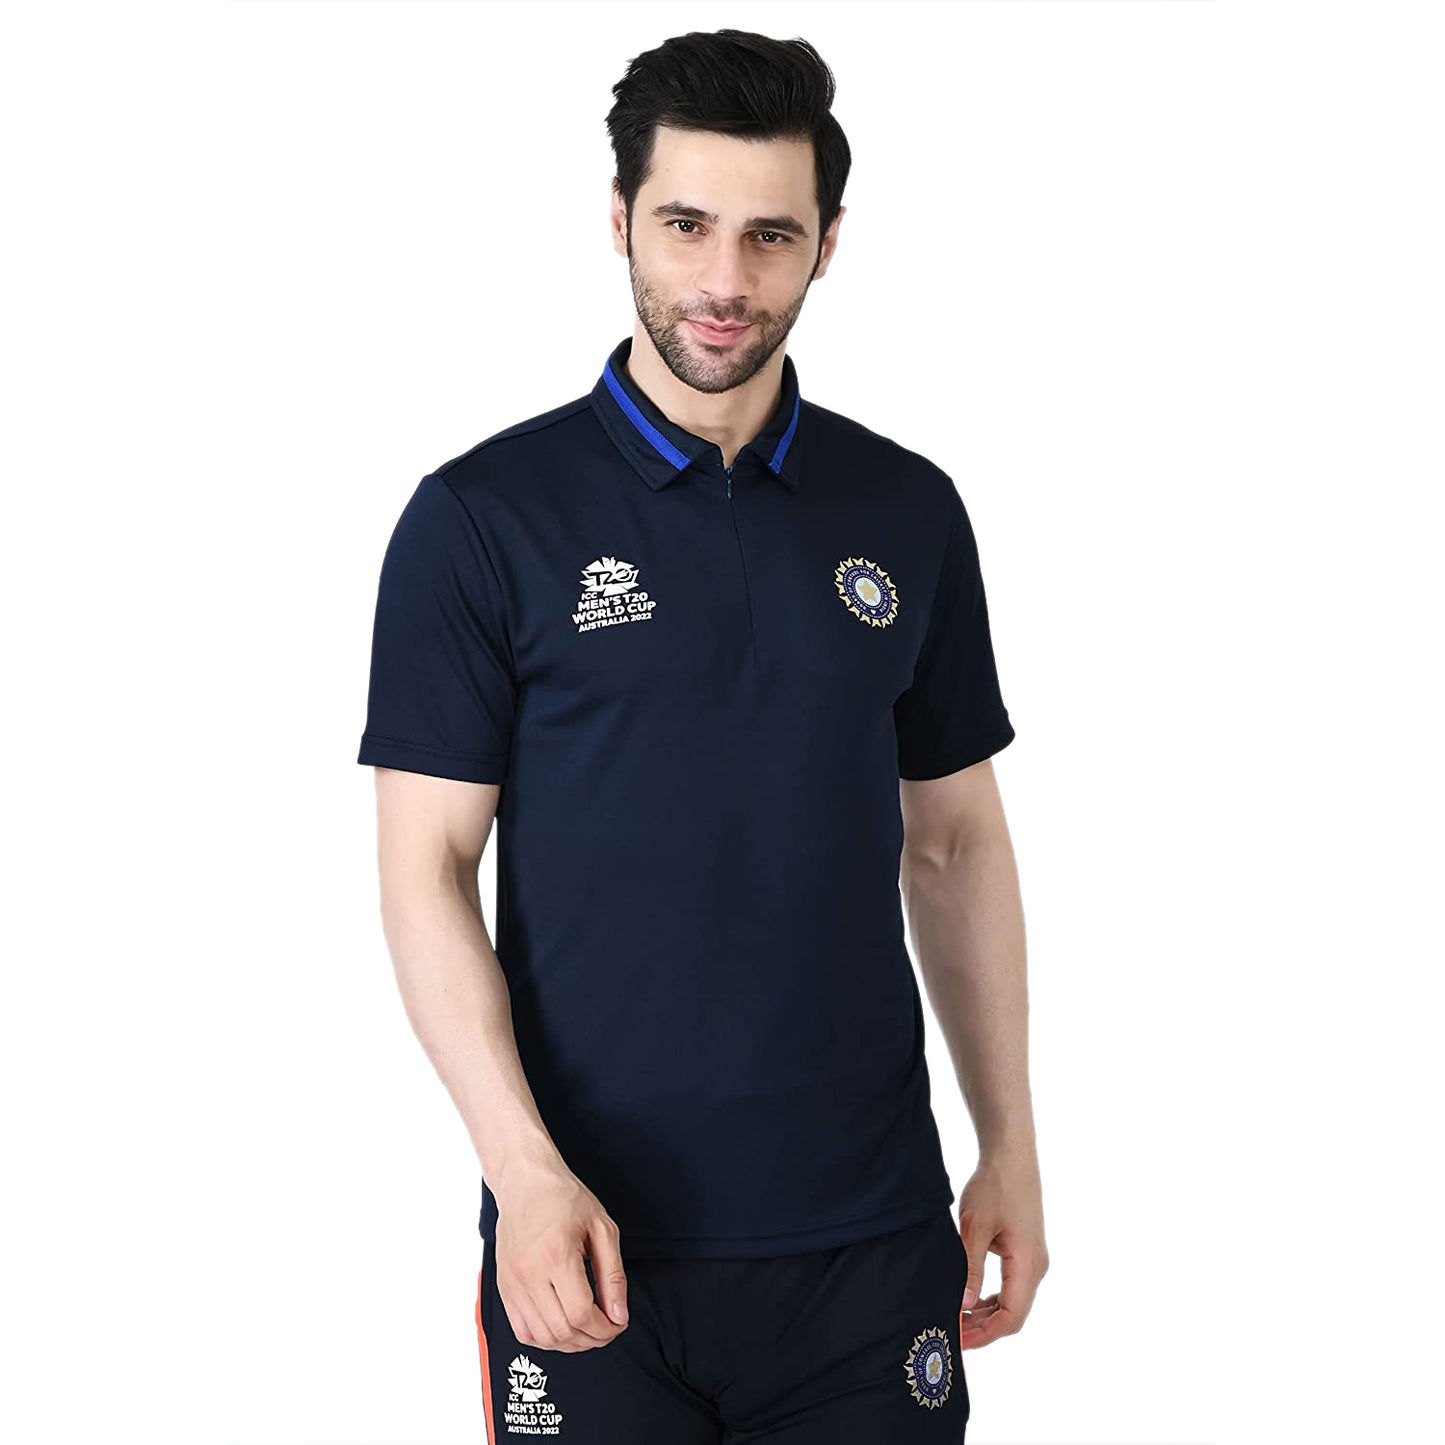 Playr Icc T20 Men's Regular Fit T-Shirt, Navy - Best Price online Prokicksports.com